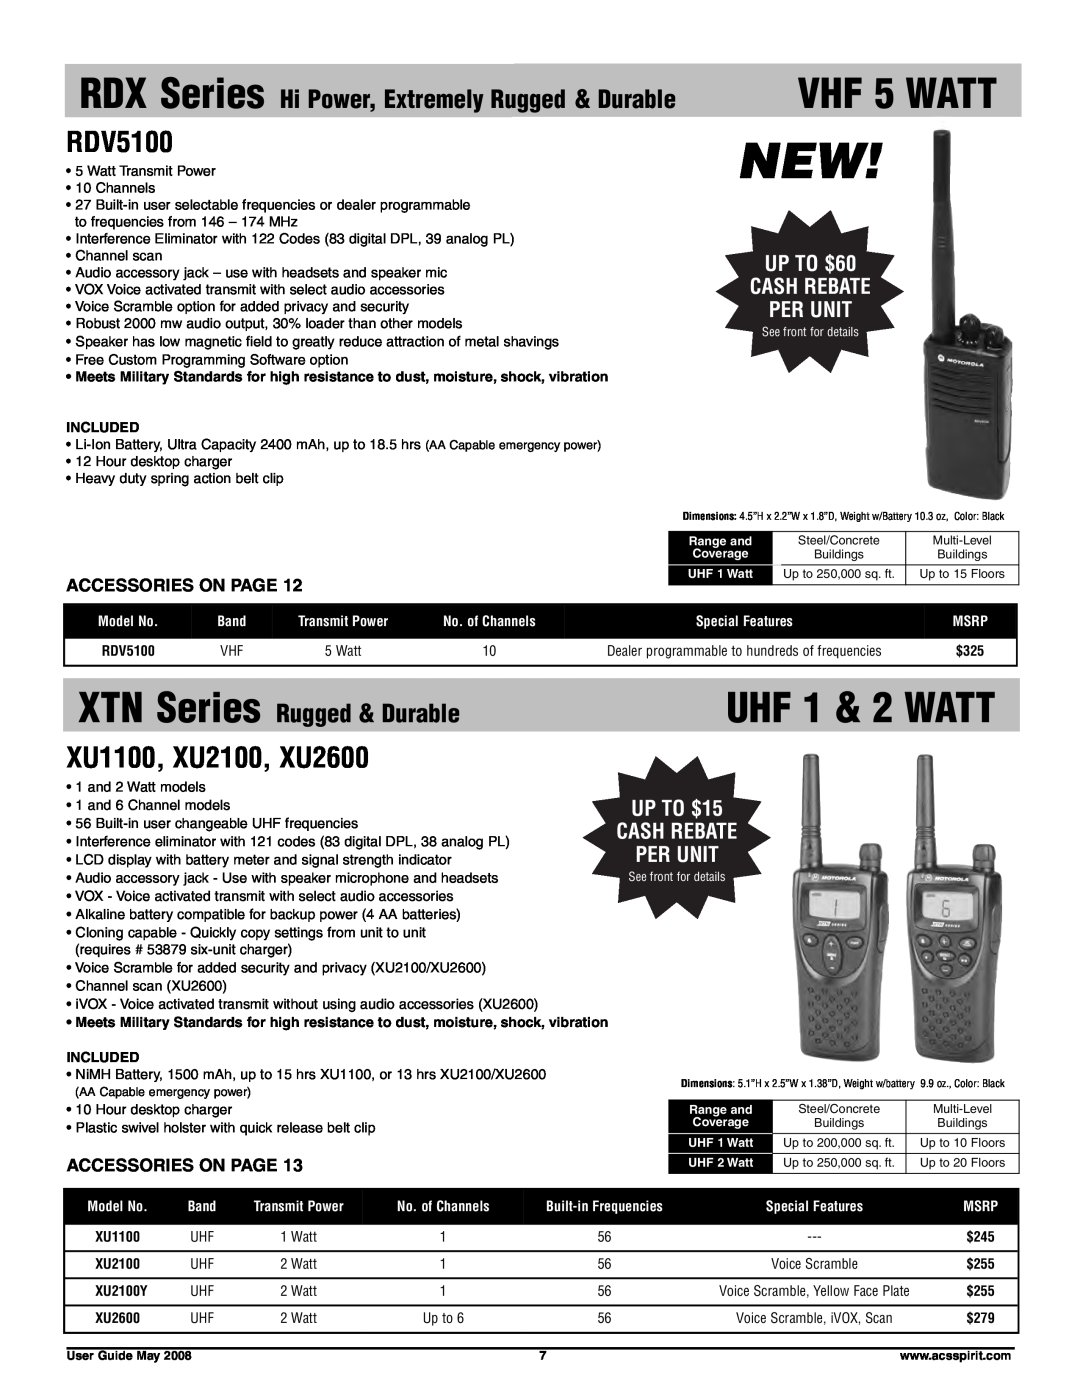 Motorola RDU4160D VHF 5 WATT, RDV5100, XU1100, XU2100, XU2600, RDX Series Hi Power, Extremely Rugged & Durable, Included 